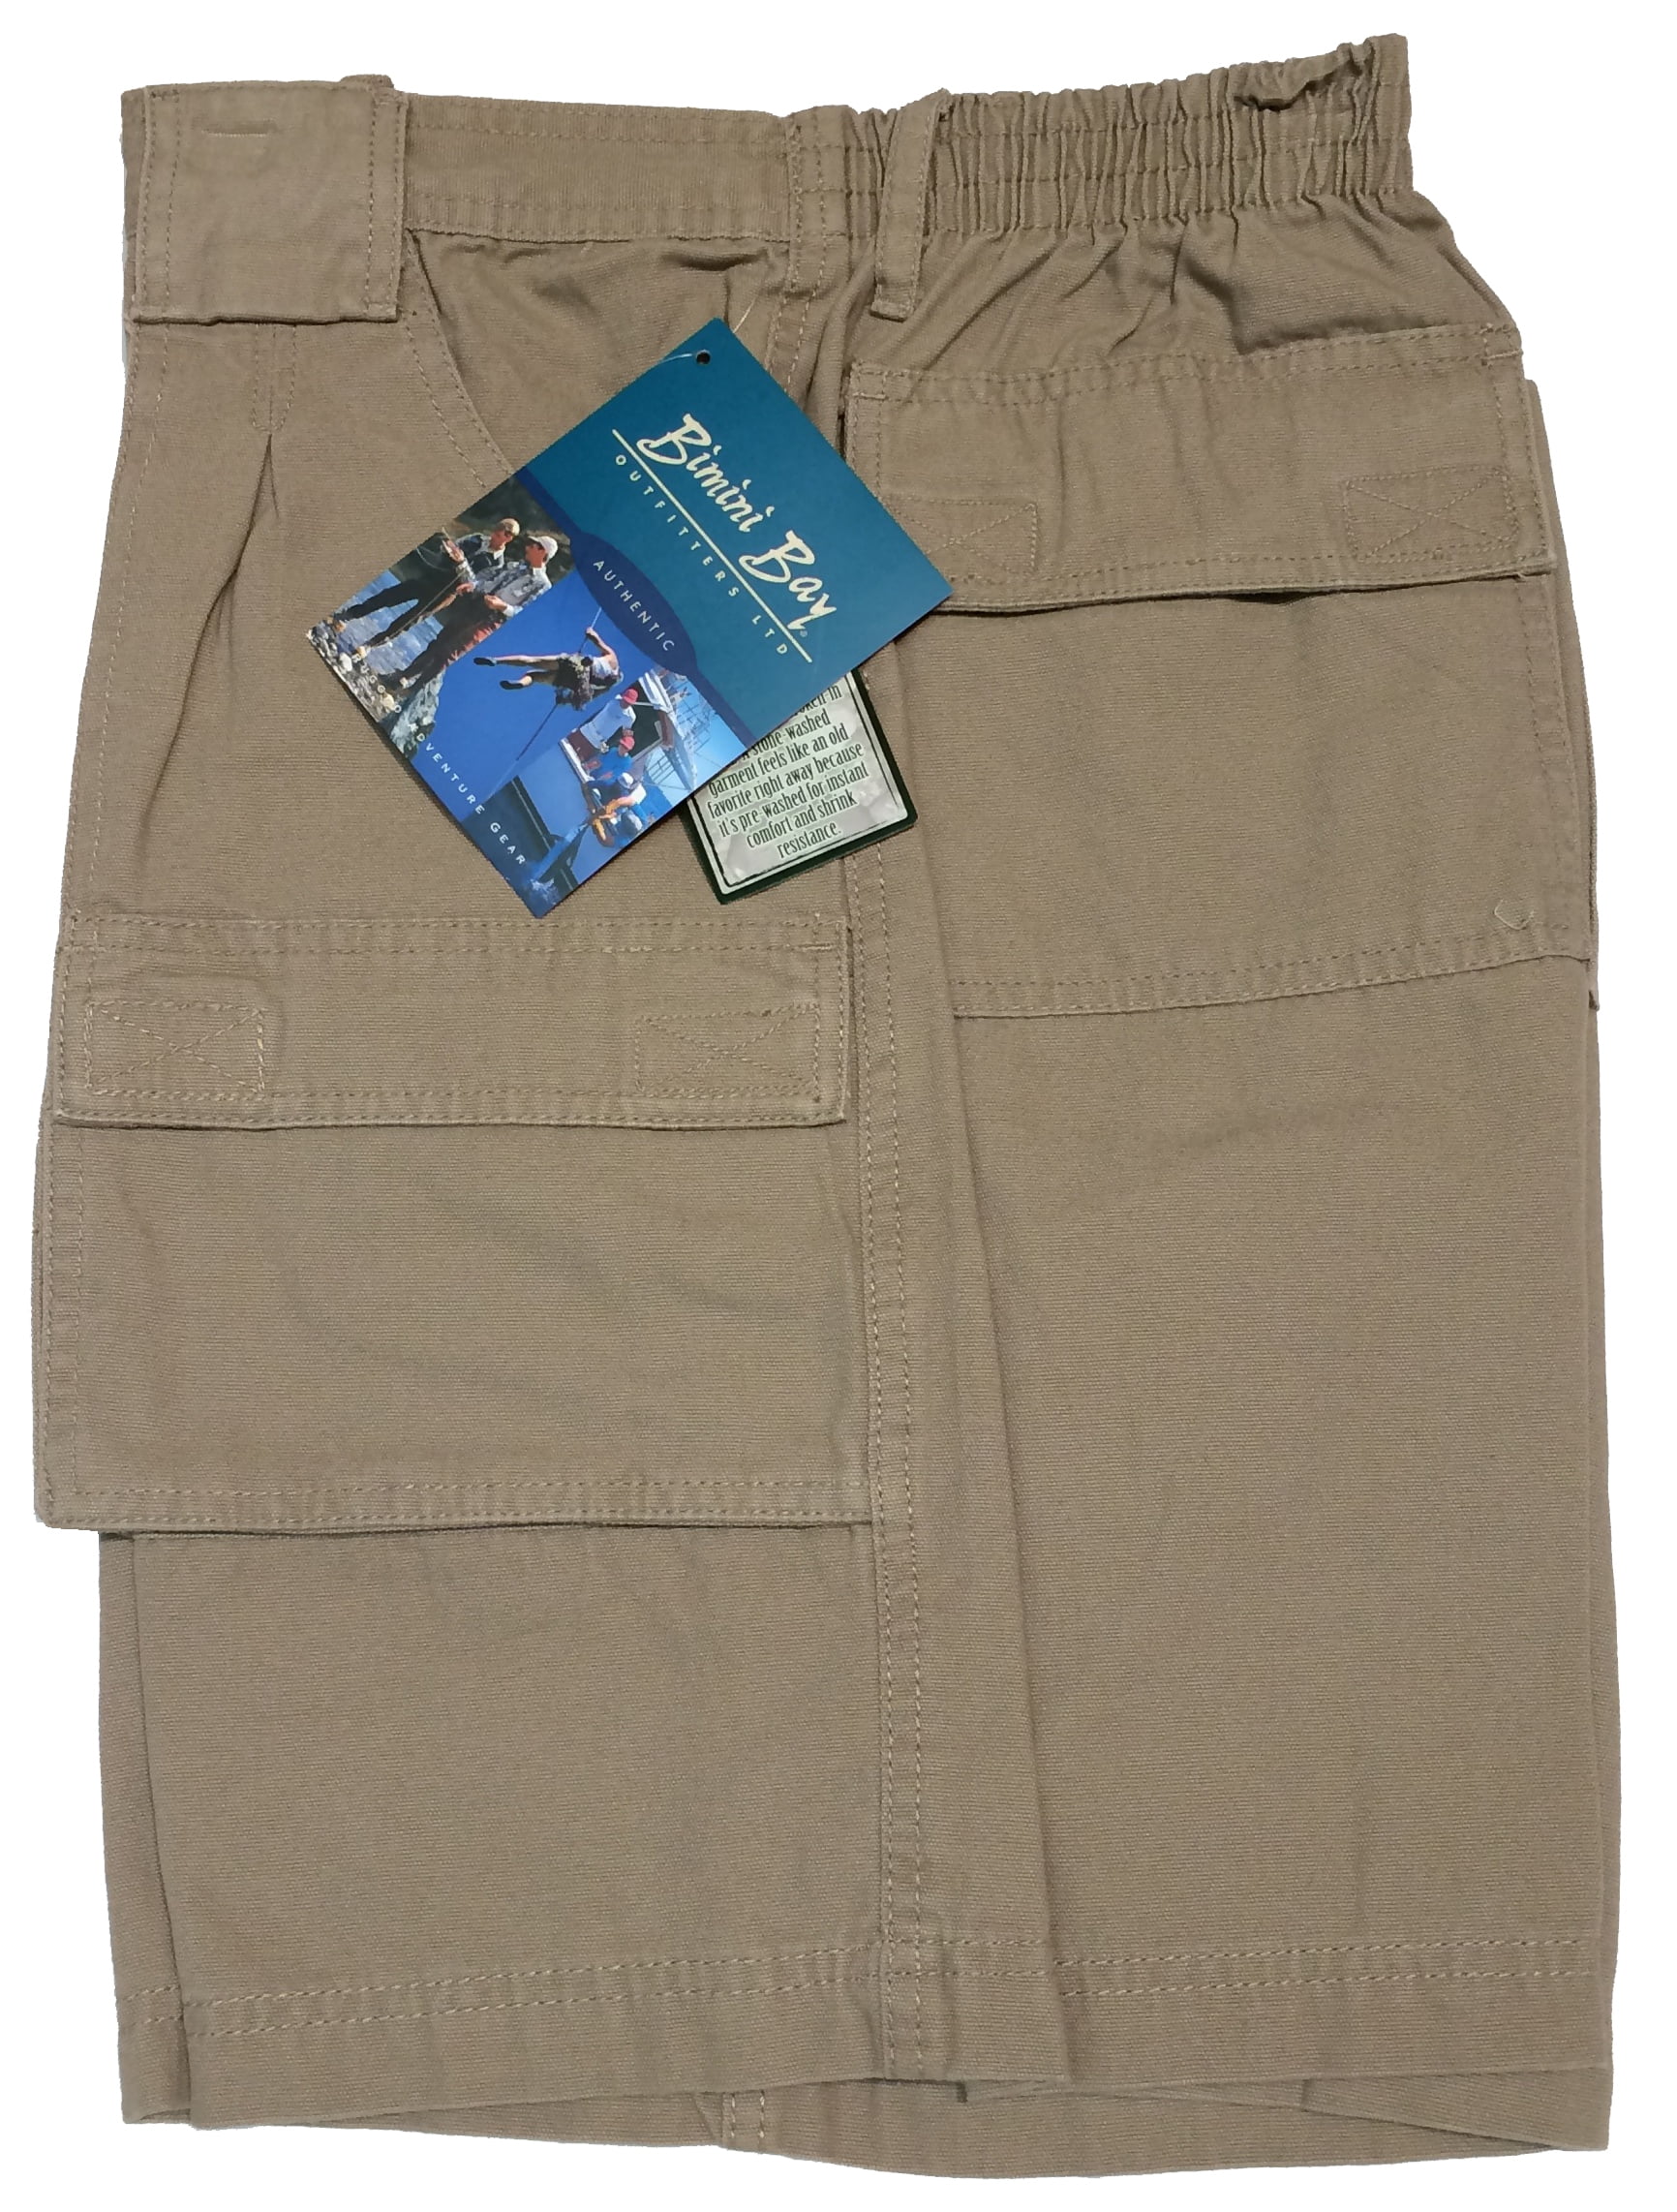 32 4224002 Tru-Spec Tru Shorts Tan Cotton/Poly Udt 